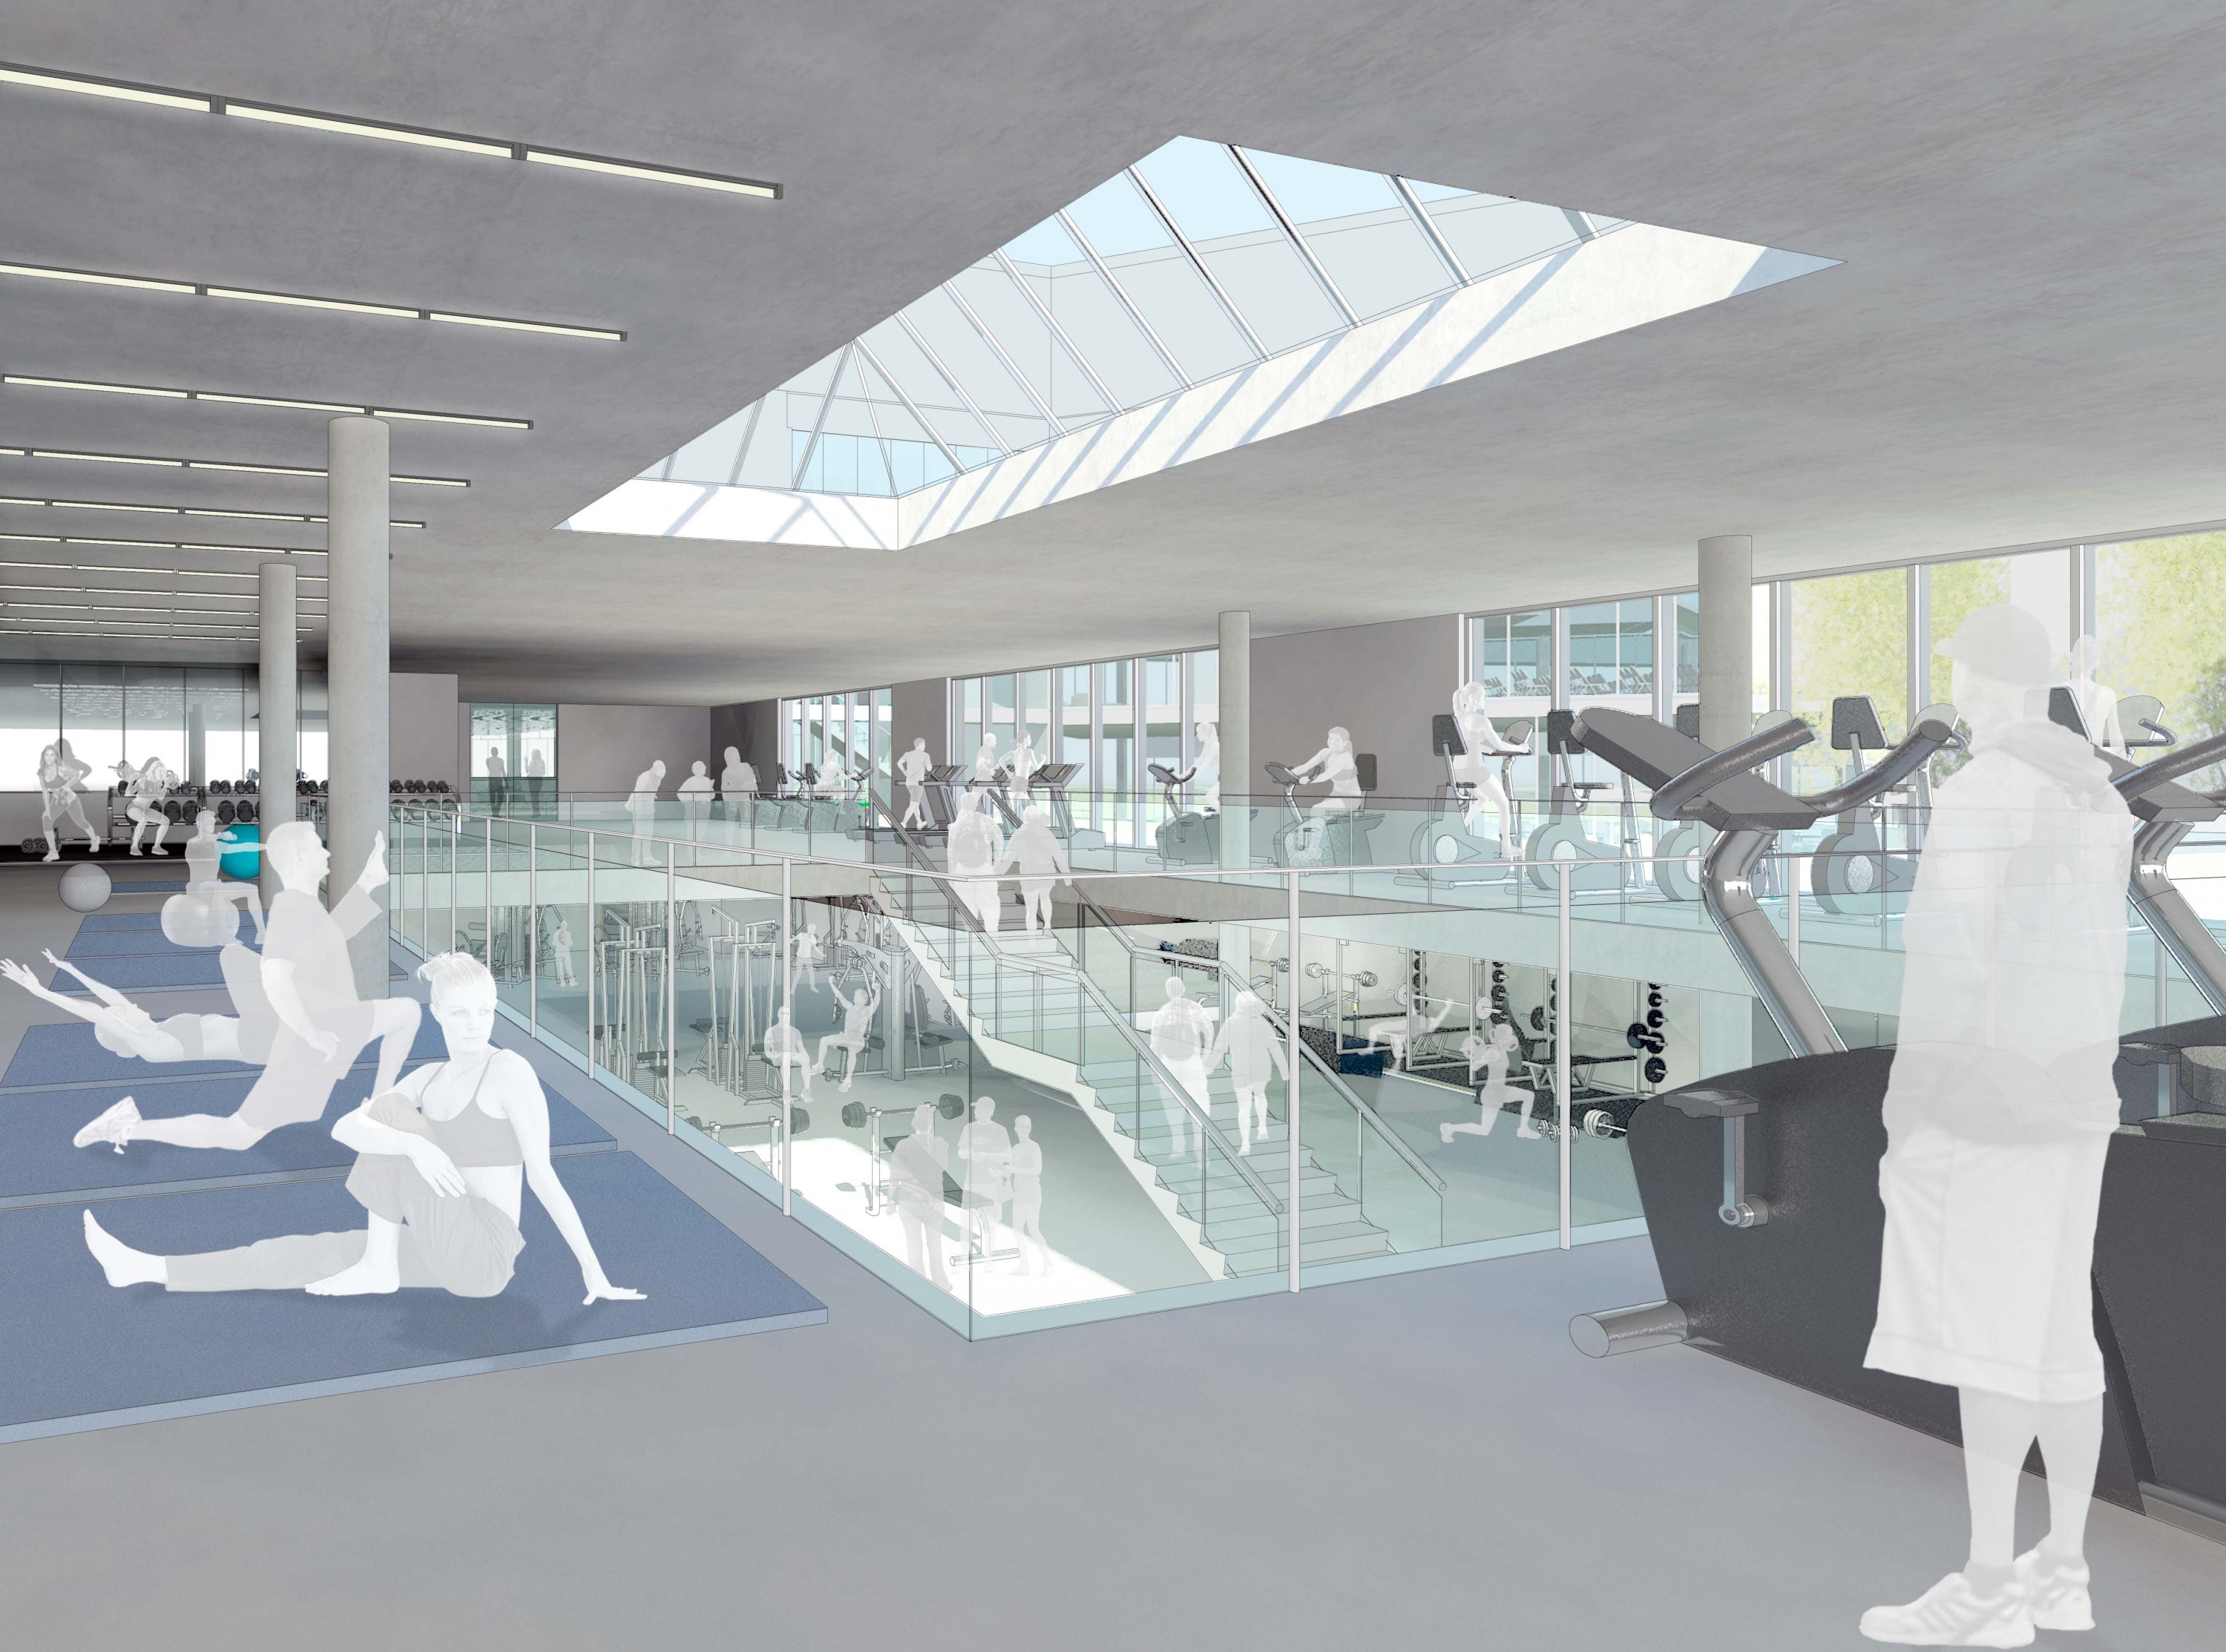 Fitness center expansion